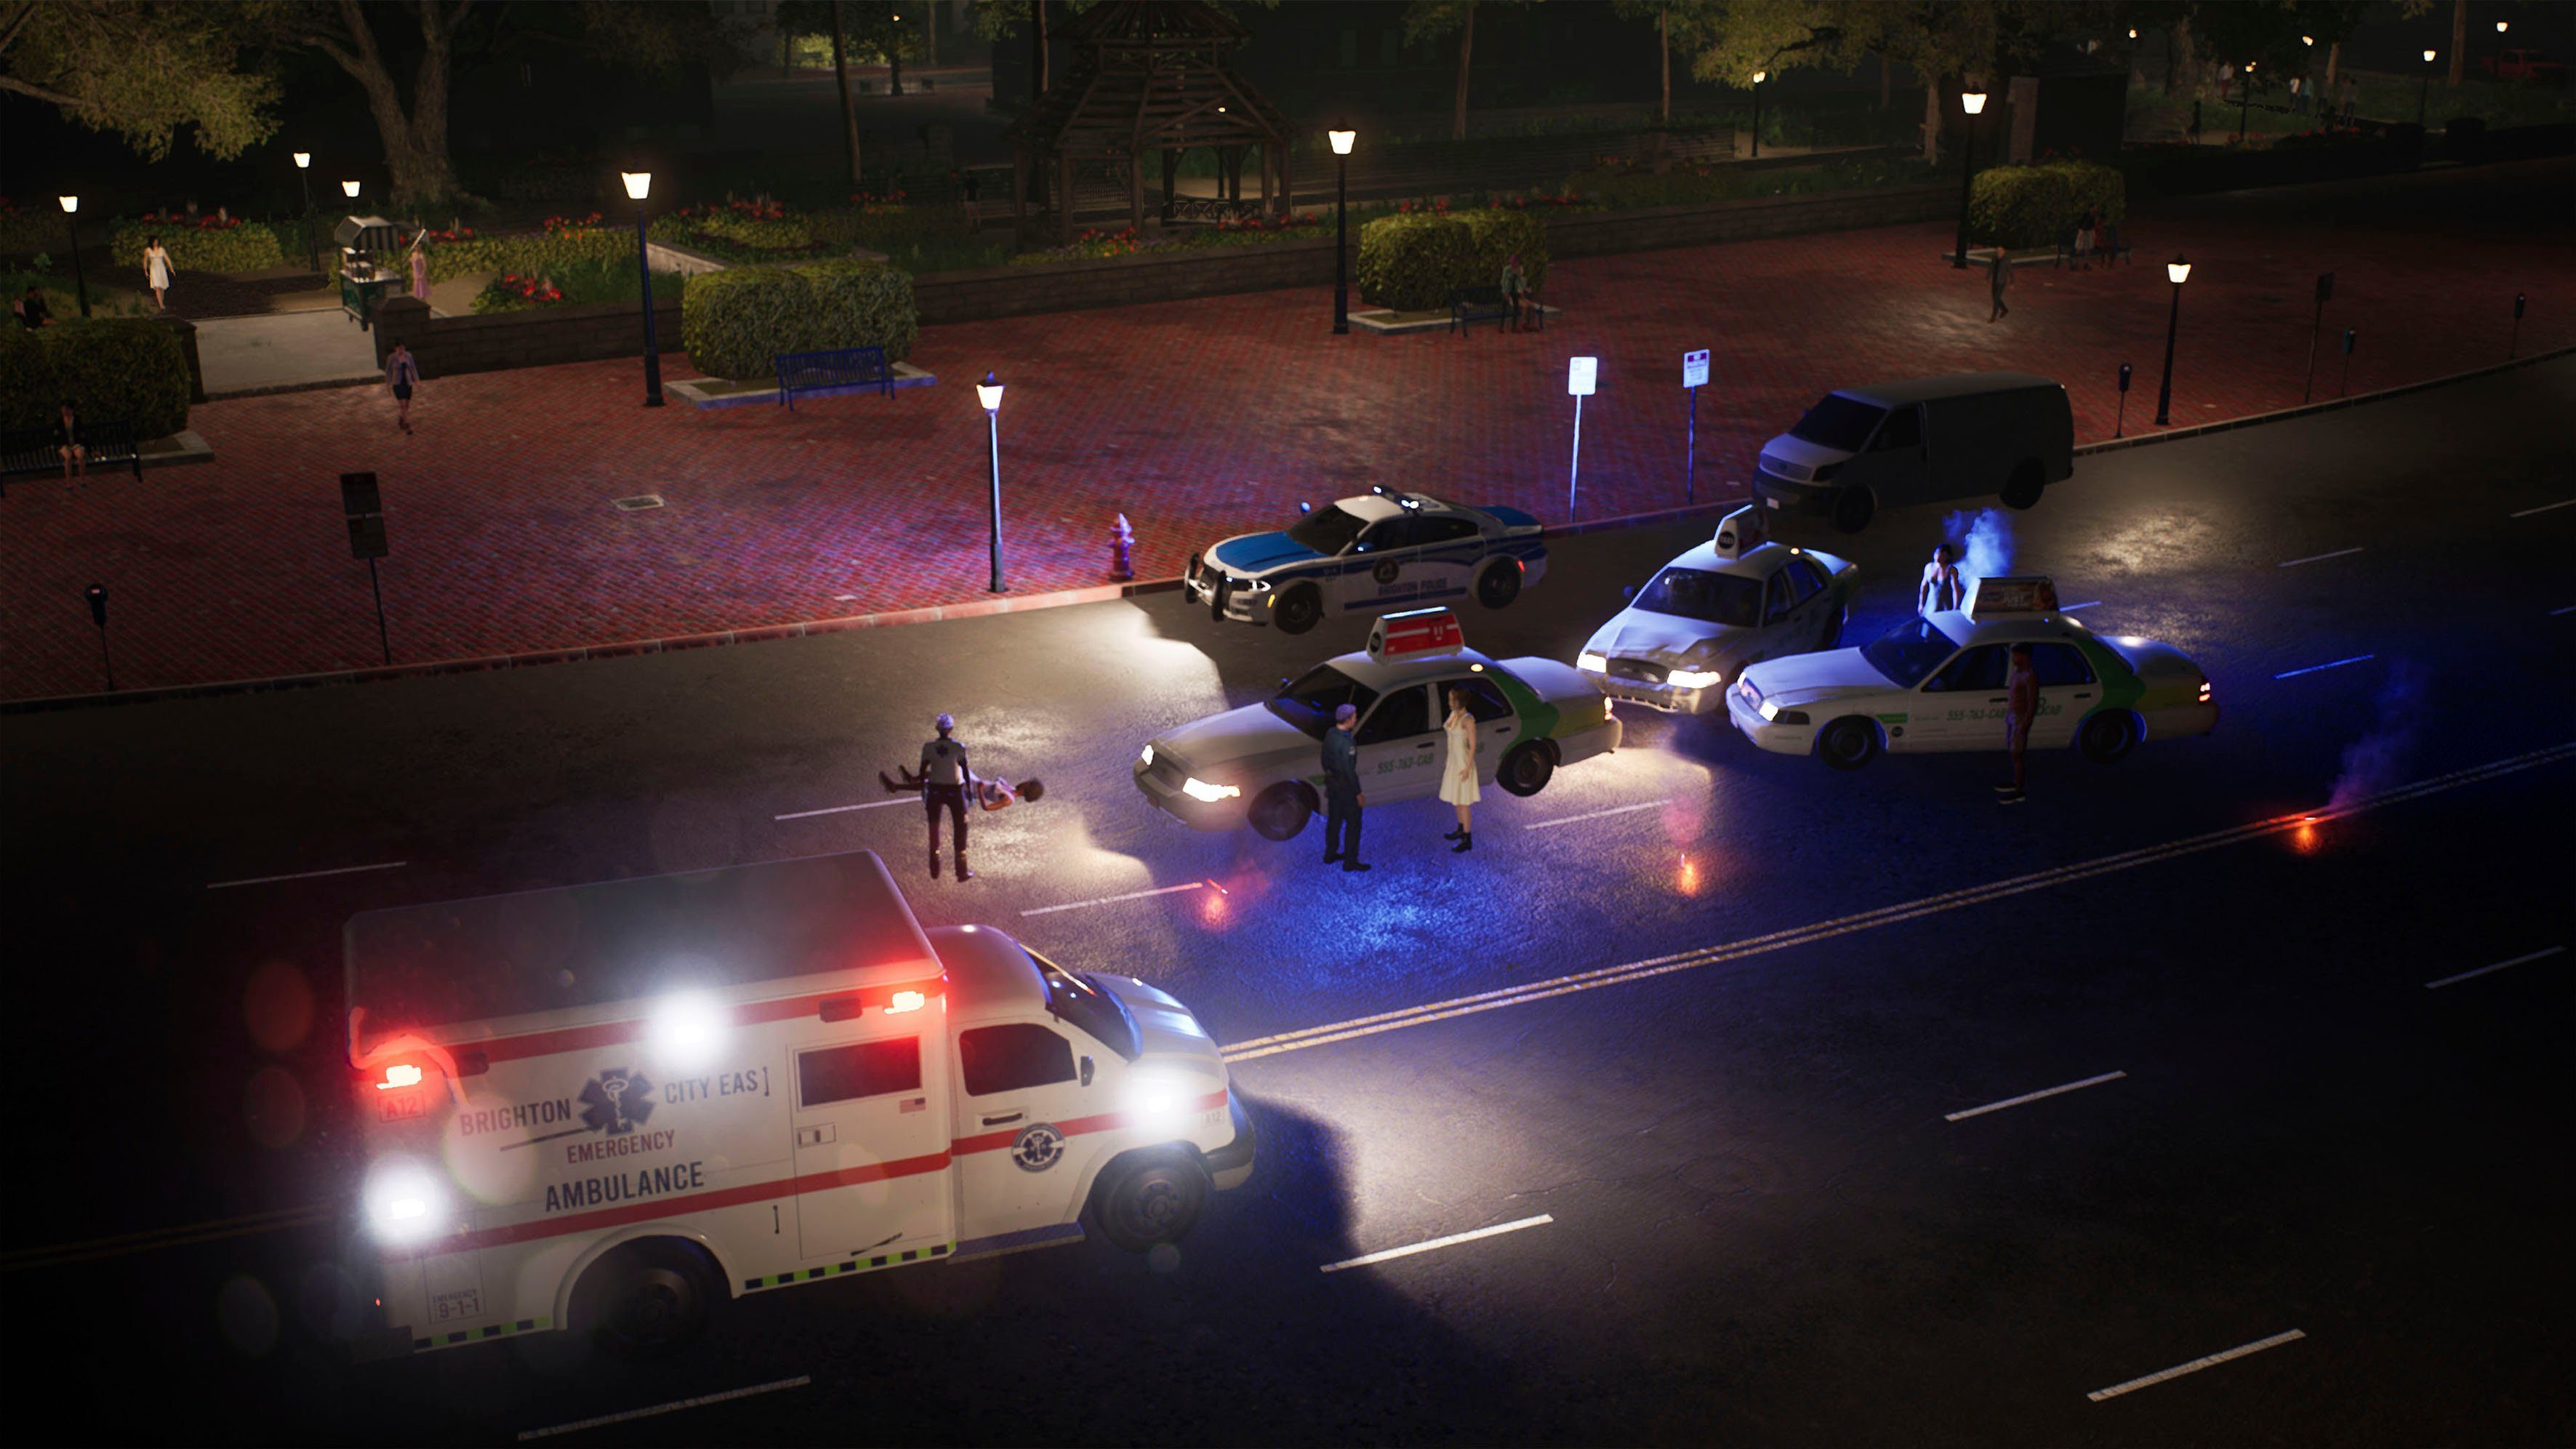 Simulator: Officers Astragon PlayStation 5 Patrol Police